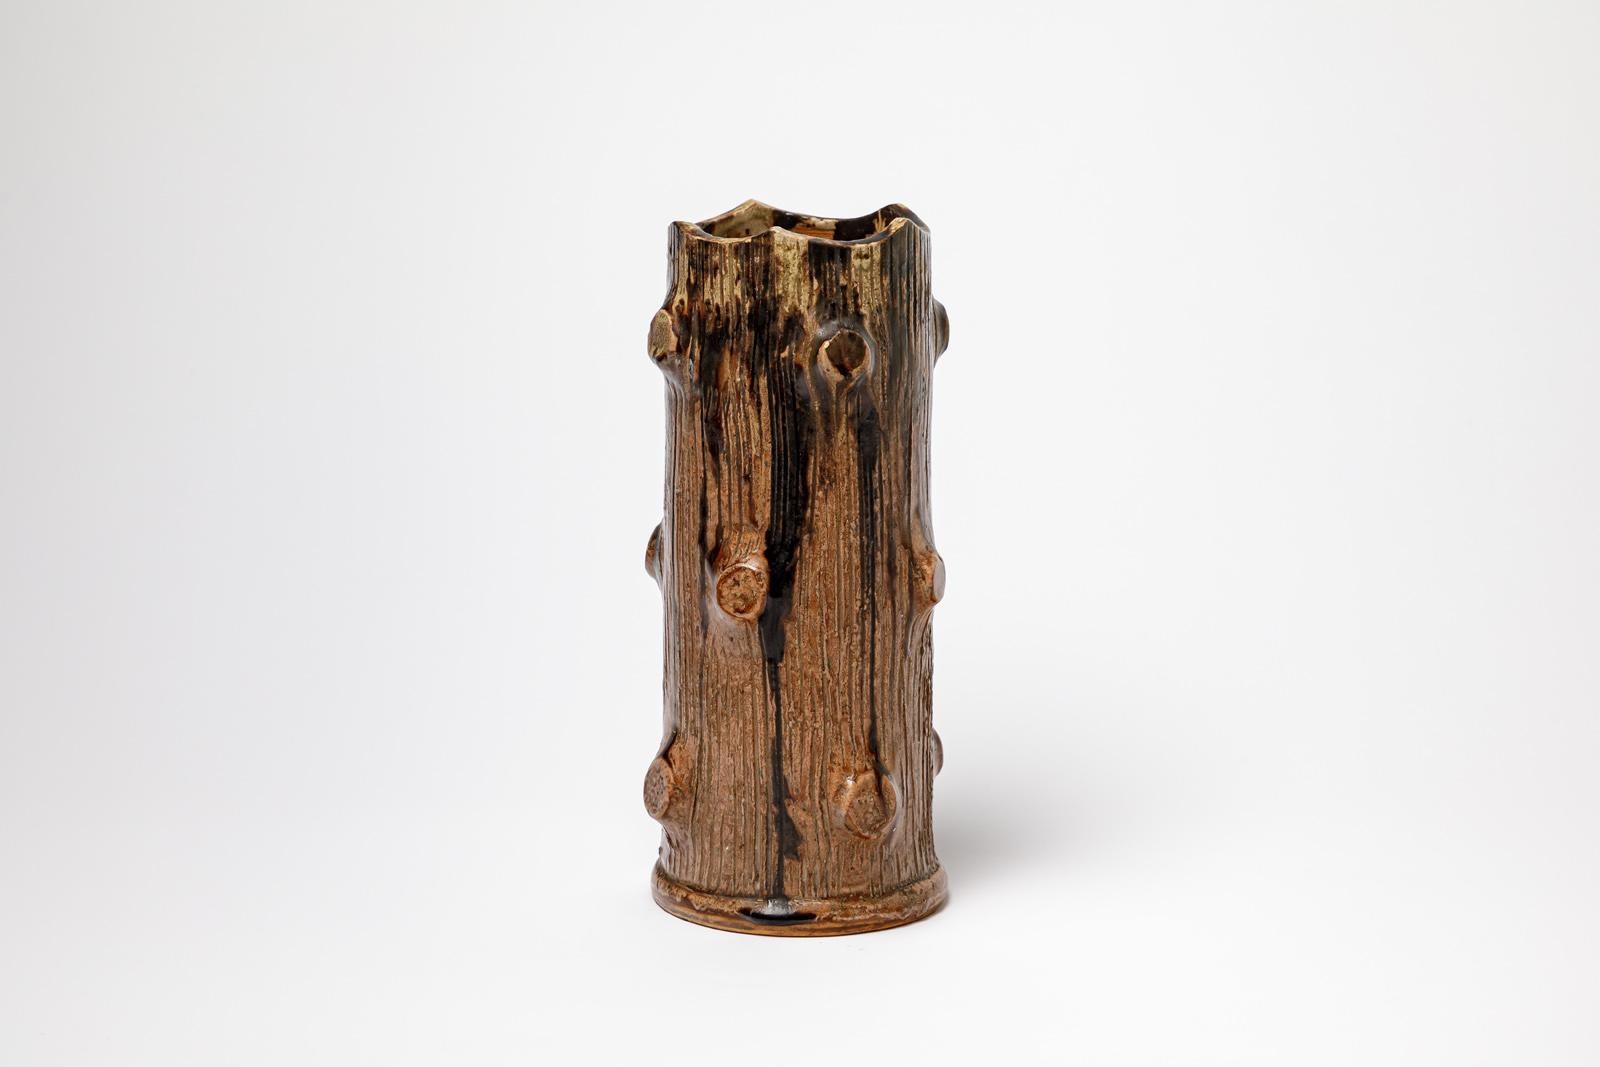 French 20th century art deco wood imitation ceramic vase by J Talbot La Borne 1940 For Sale